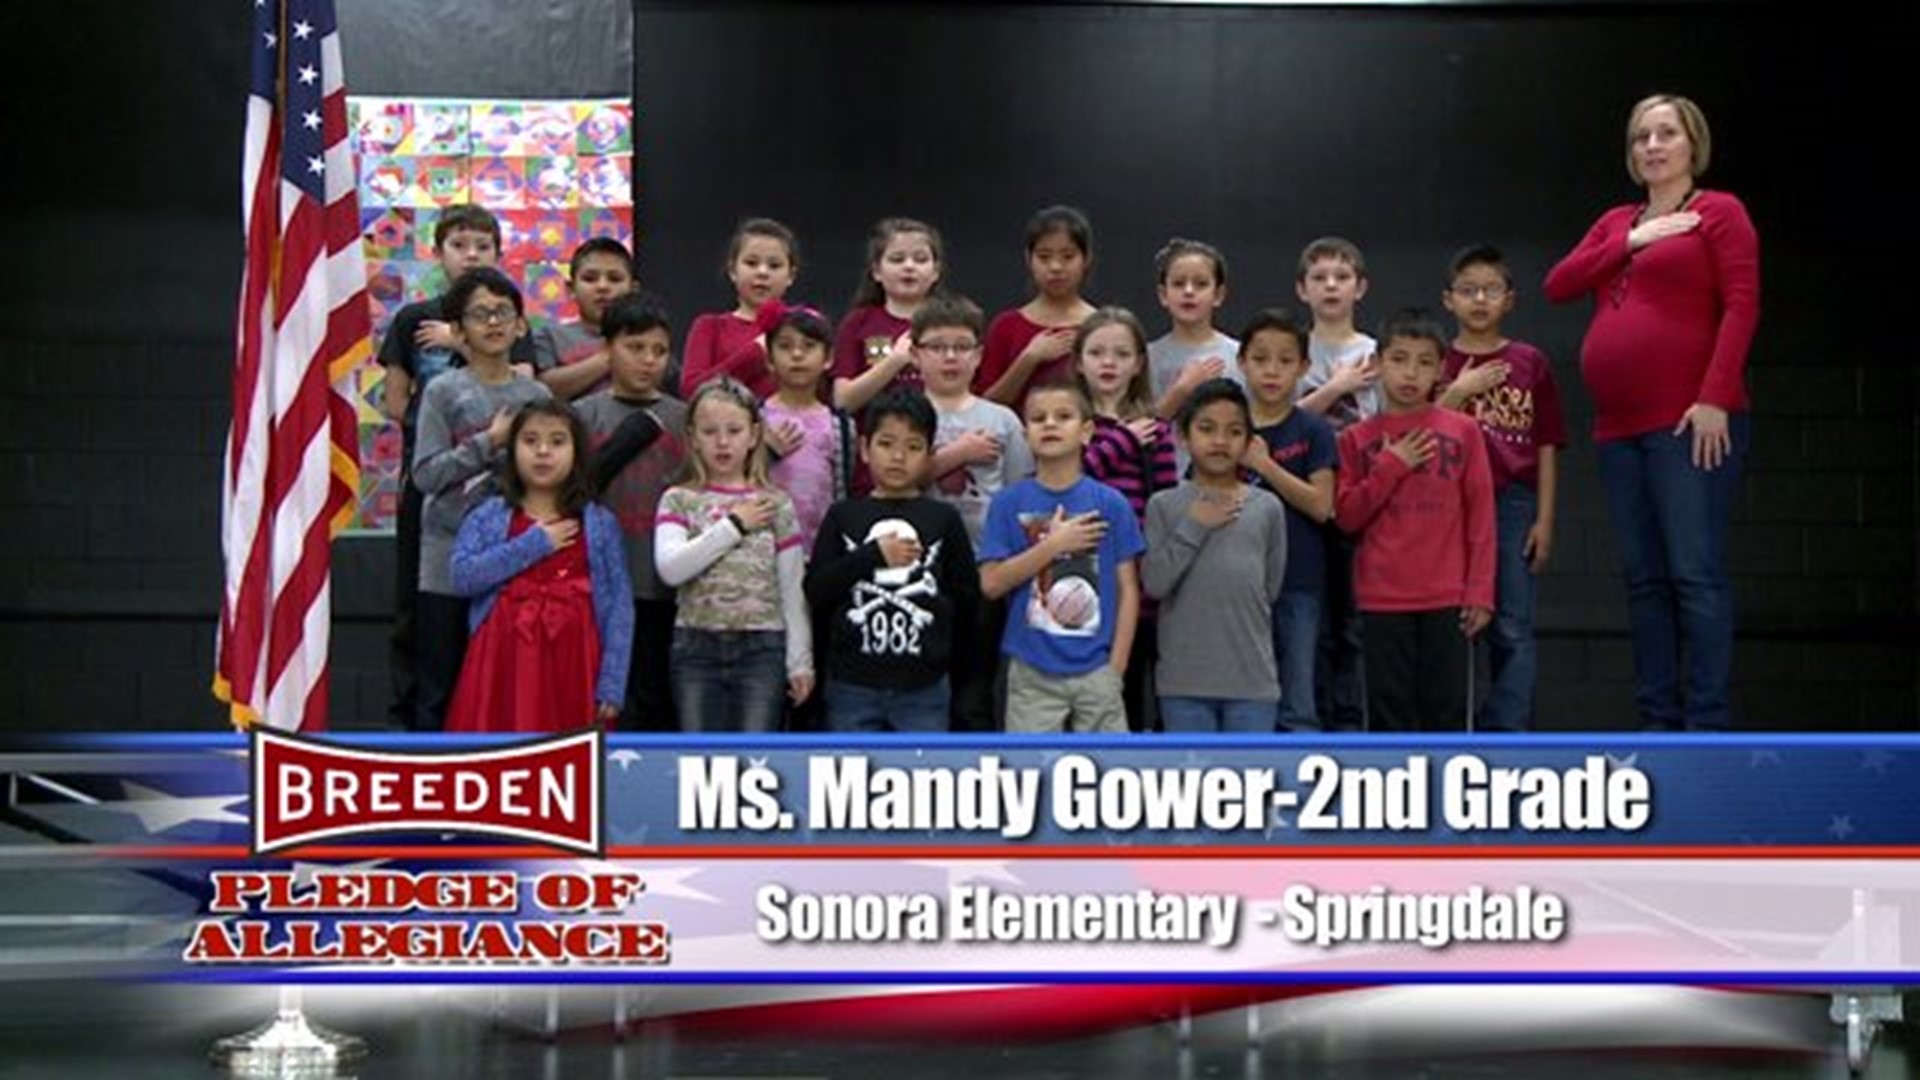 Sonora Elementary School - Springdale, Ms. Gower - Second Grade